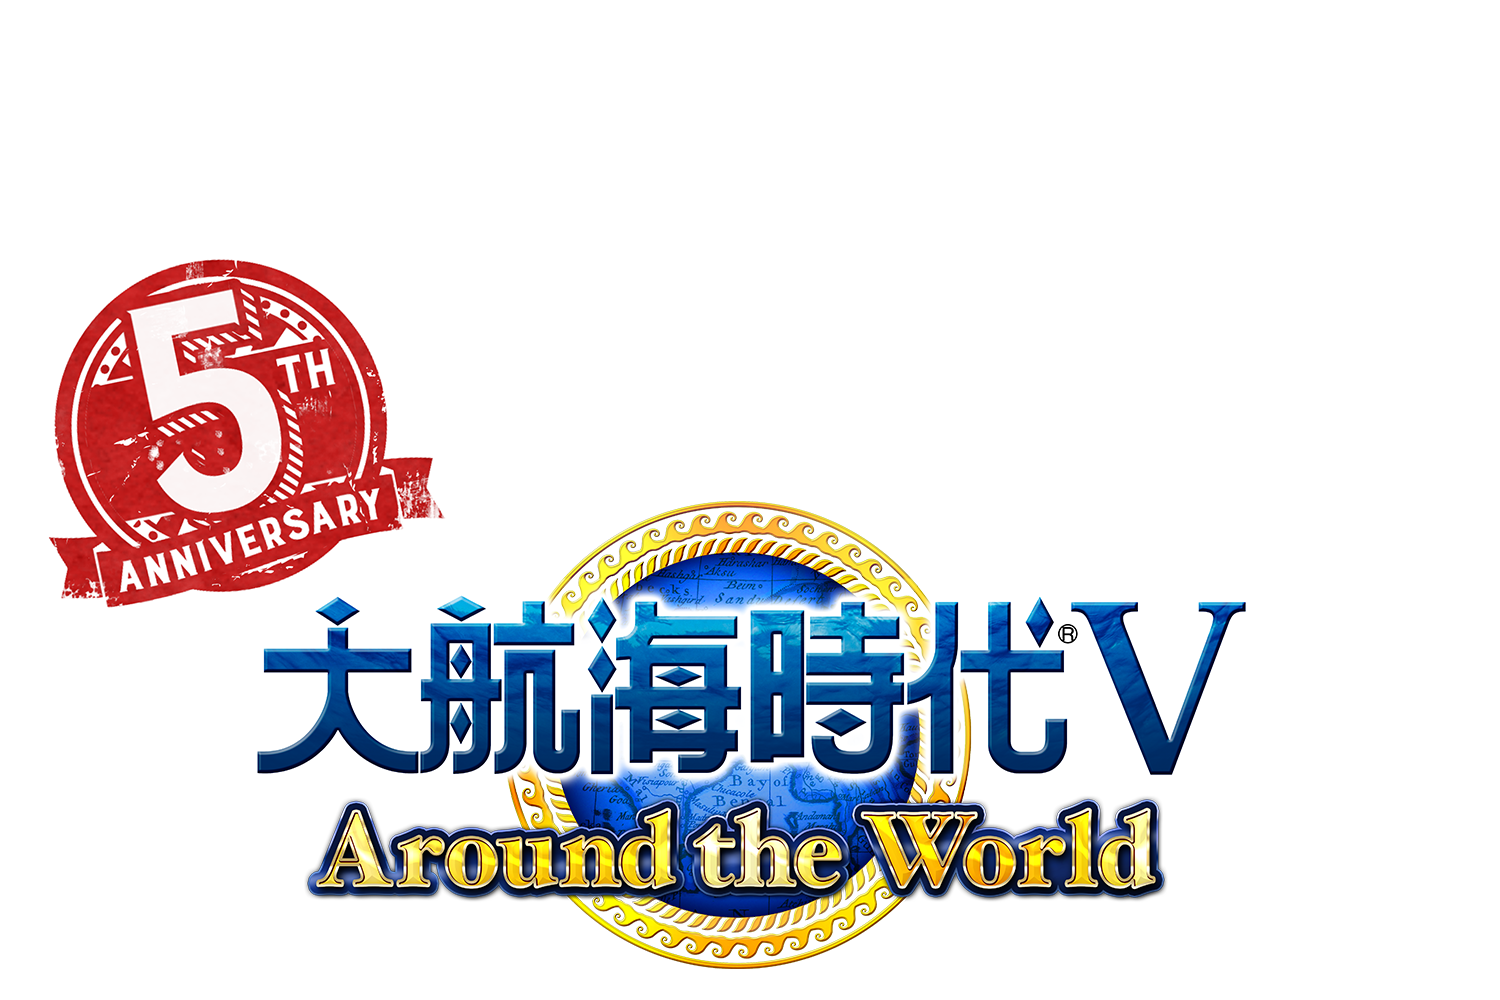 5th Anniversary 大航海時代V -Around the World-